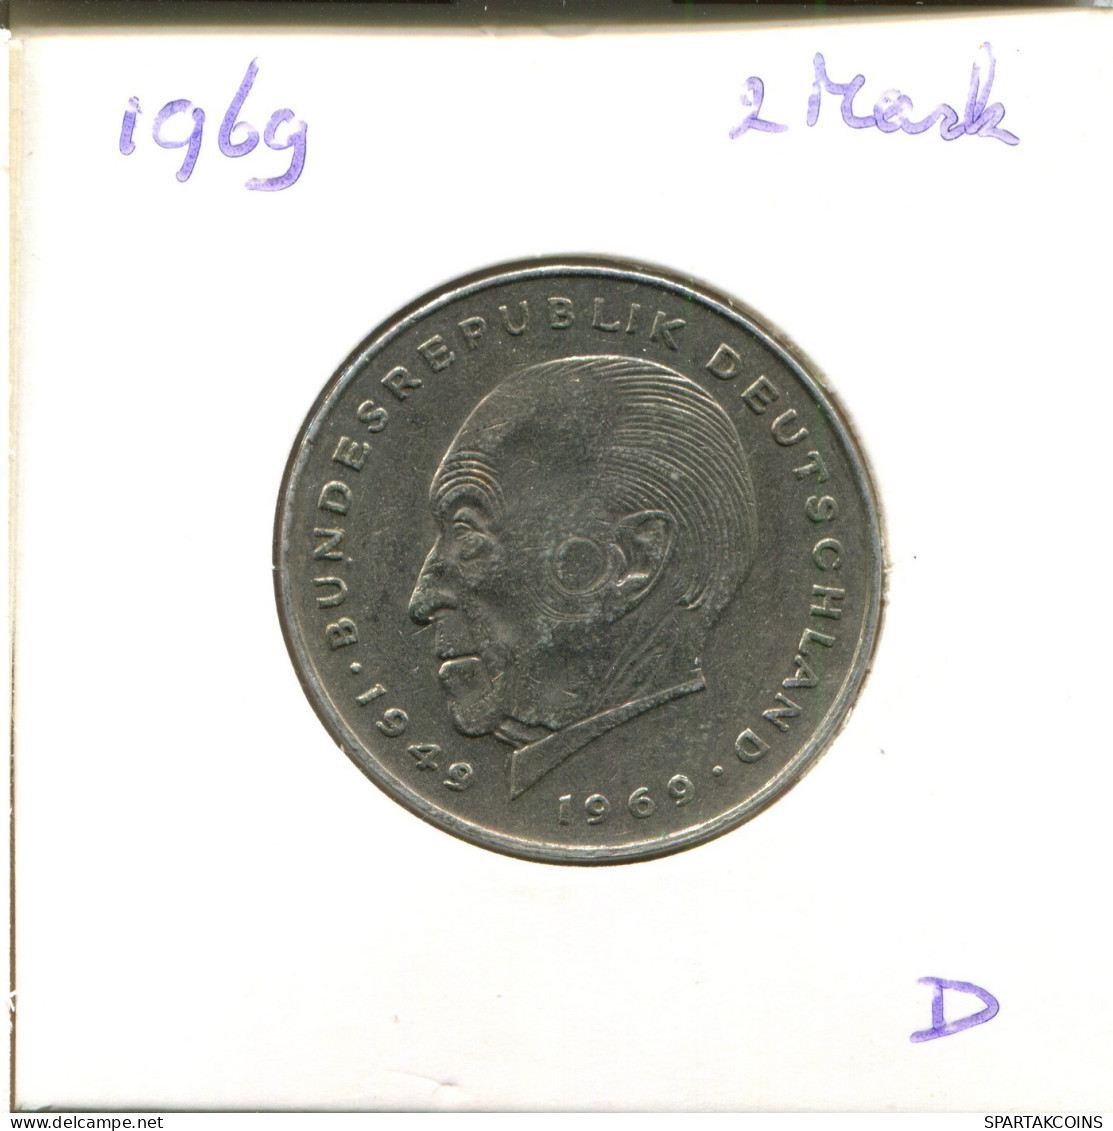 2 DM 1969 D K. ADENAUER WEST & UNIFIED GERMANY Coin #DA816.U.A - 2 Marchi